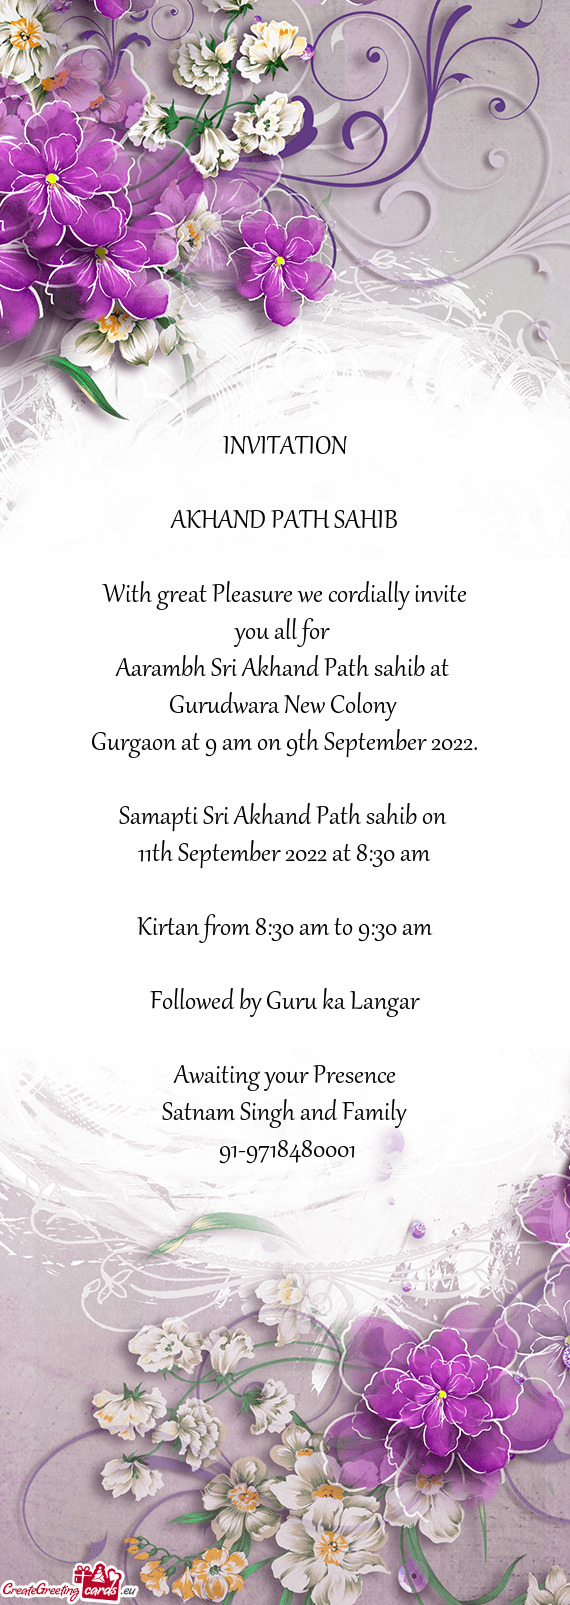 Gurudwara New Colony